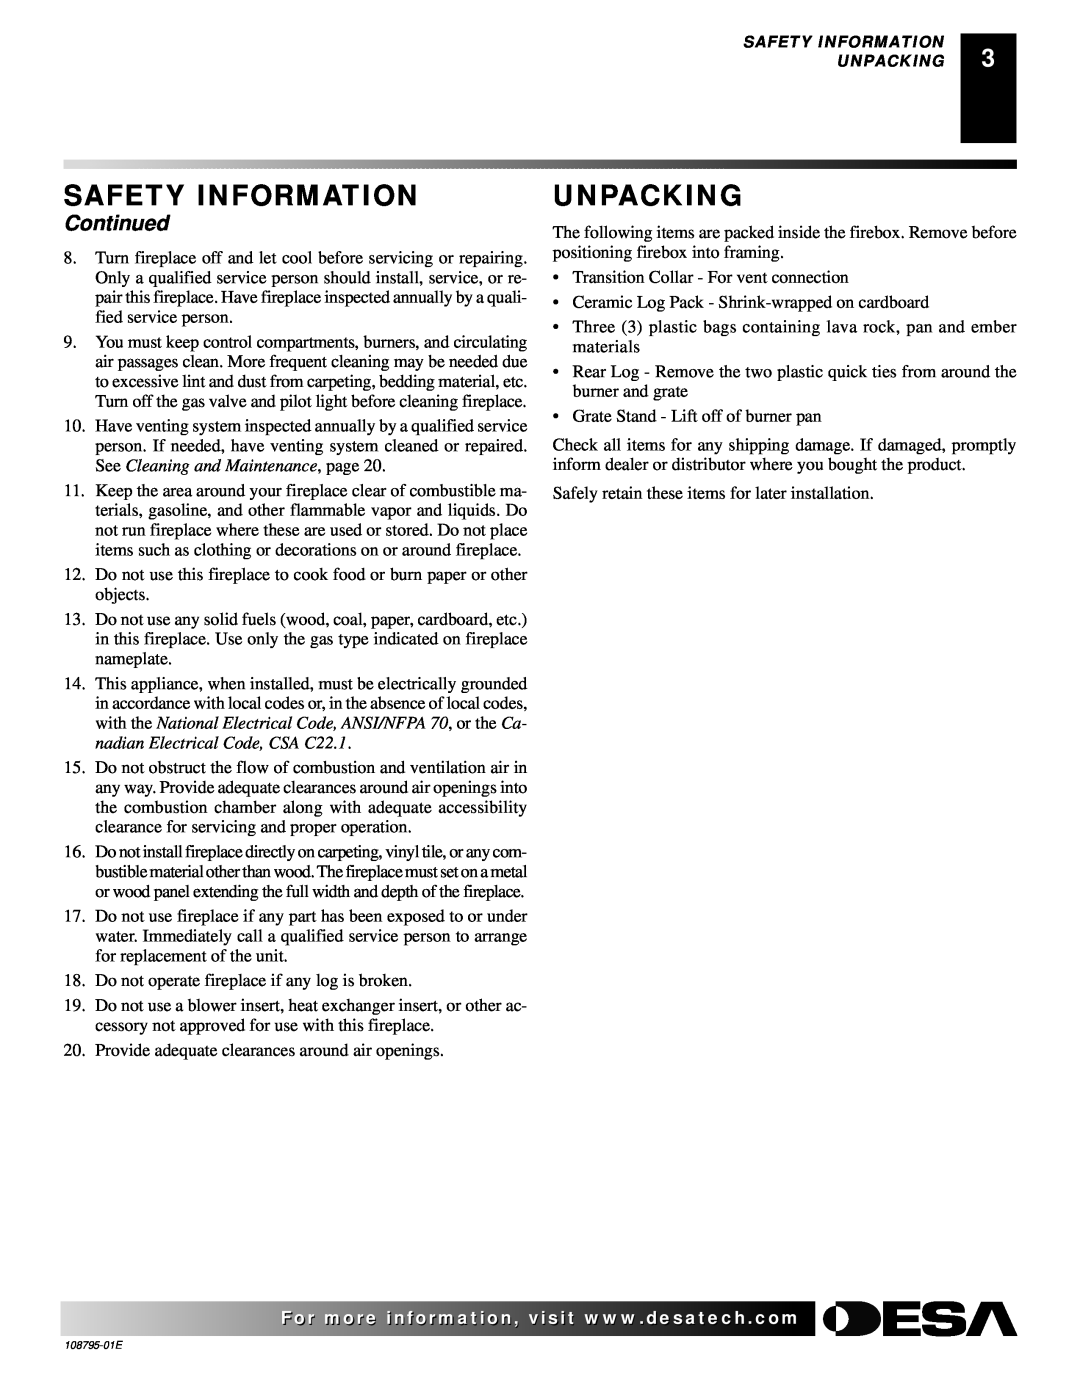 Desa VM42, M36 installation manual Unpacking, Continued, Safety Information 